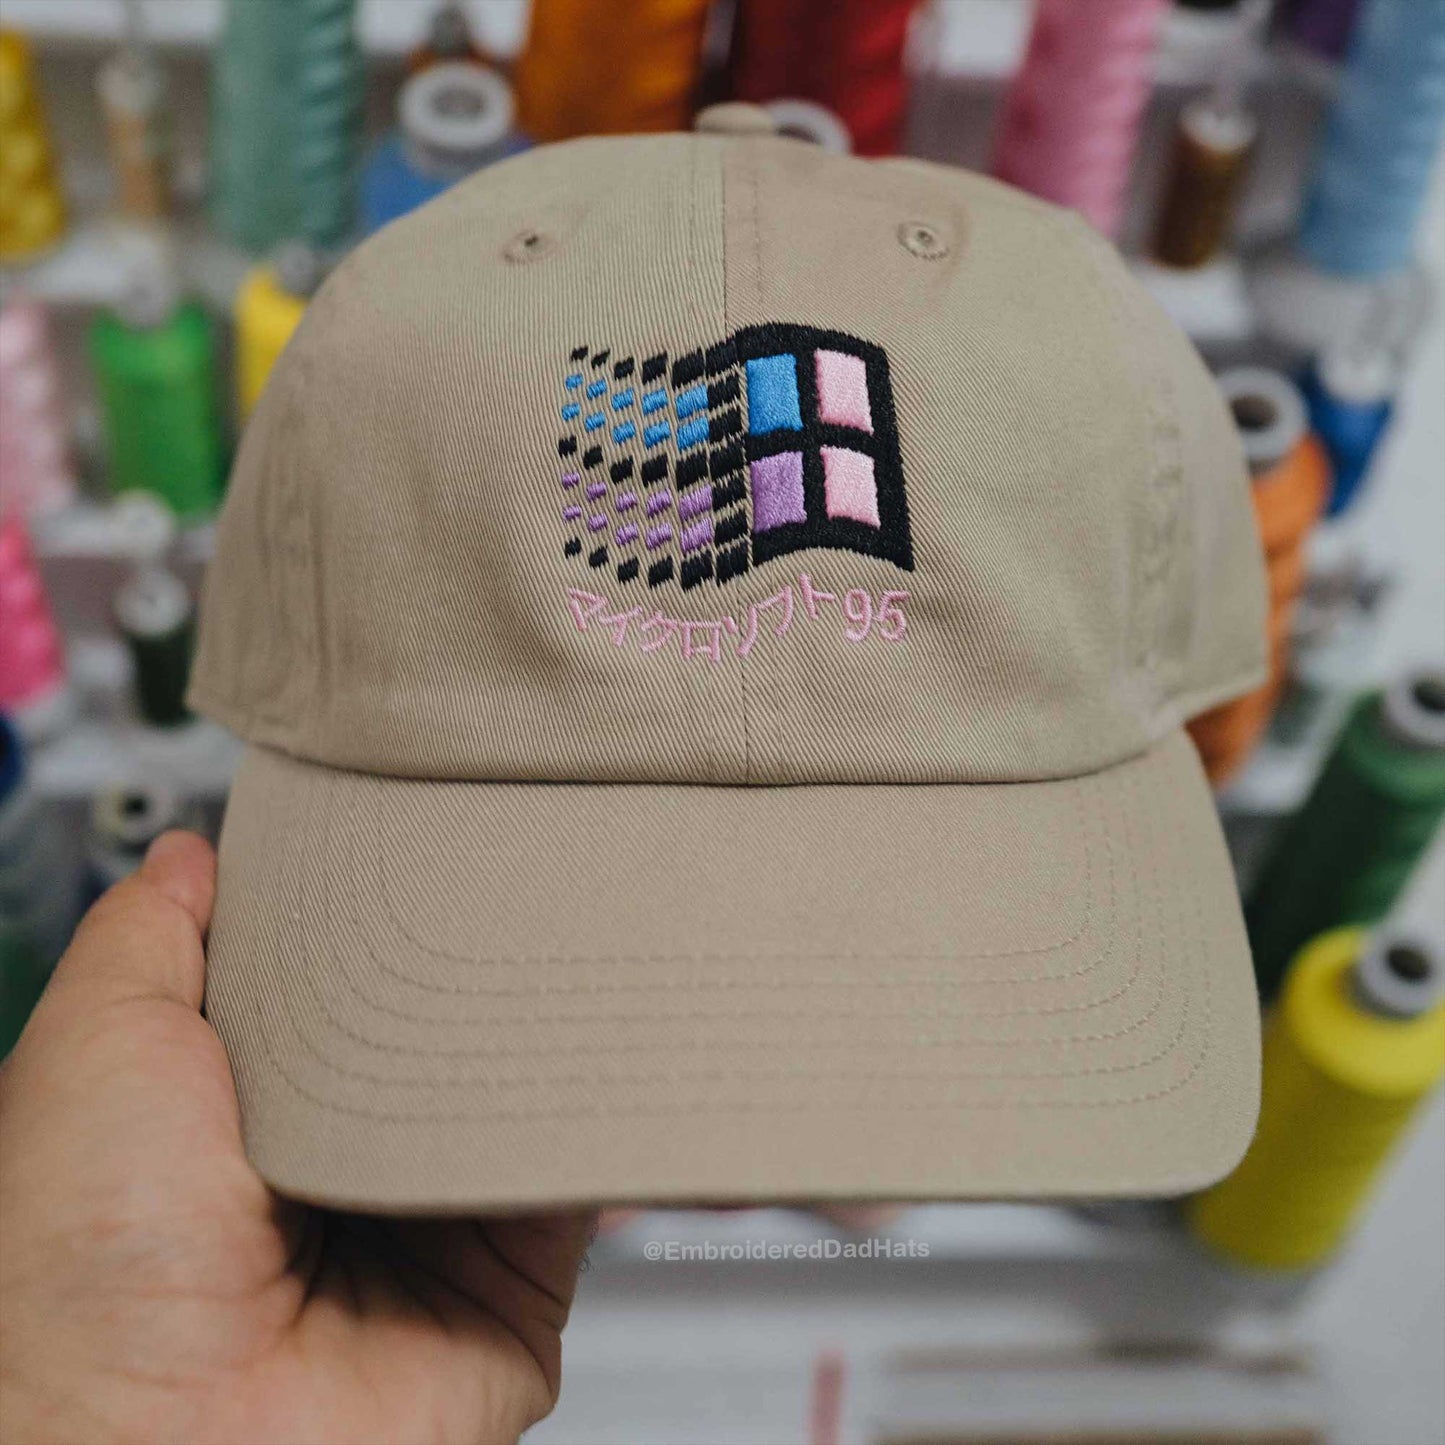 Windows 95 Vaporwave Retro Embroidered Hat